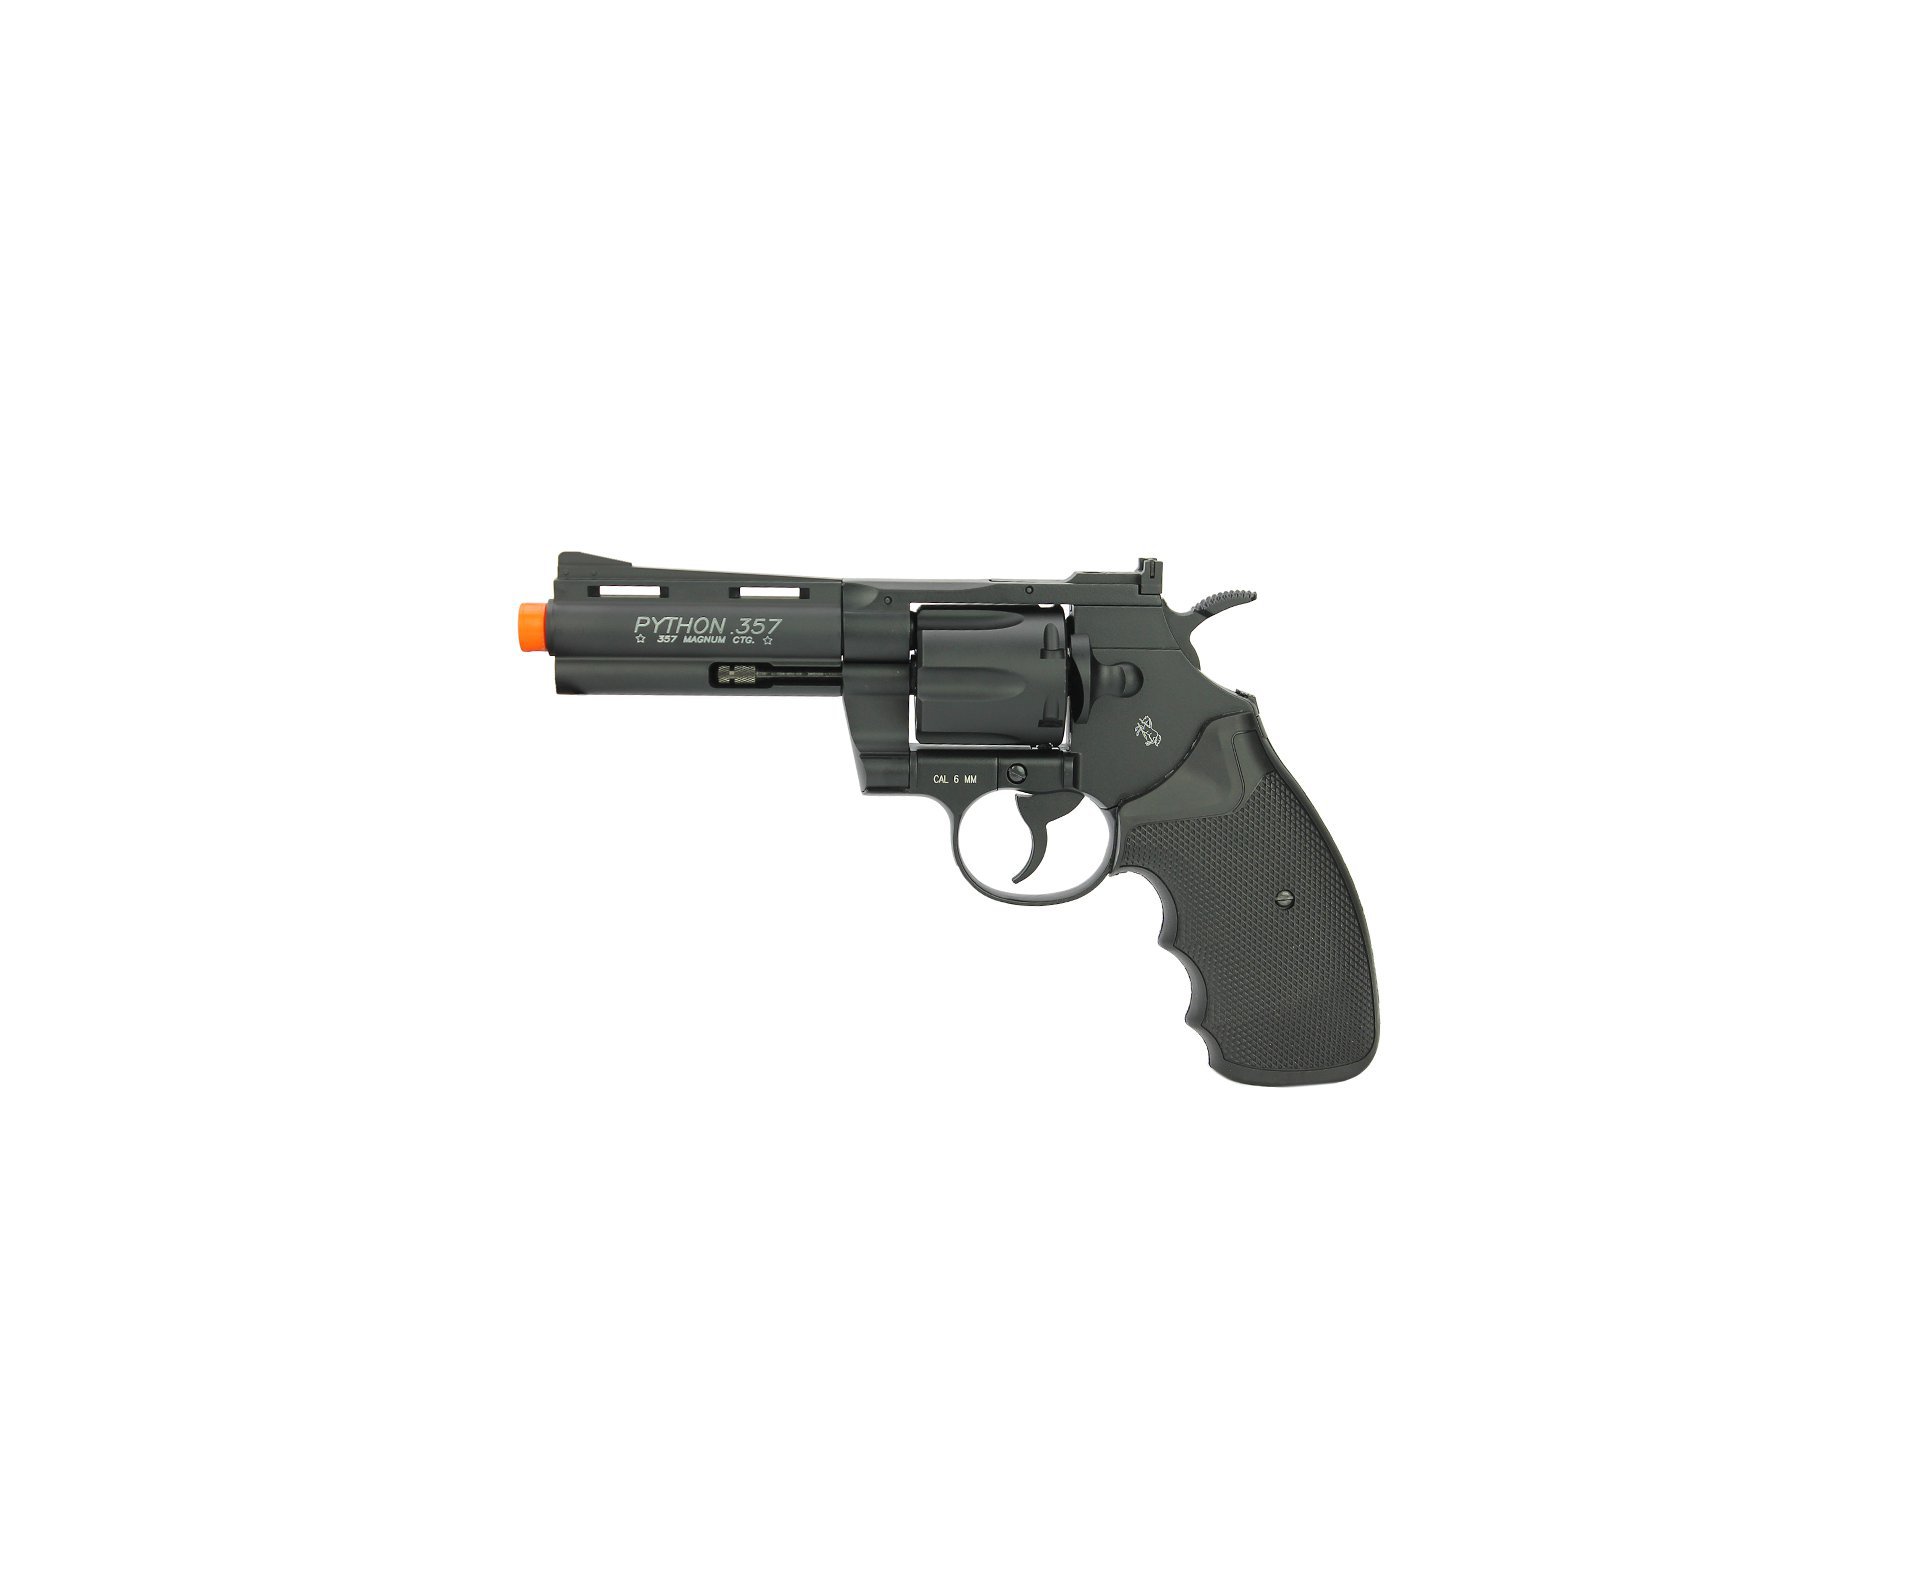 Revolver De Airsoft Co2 Colt Python 357 4 Pol Full Metal Cal 6,0mm + Maleta + Bbs + Co2